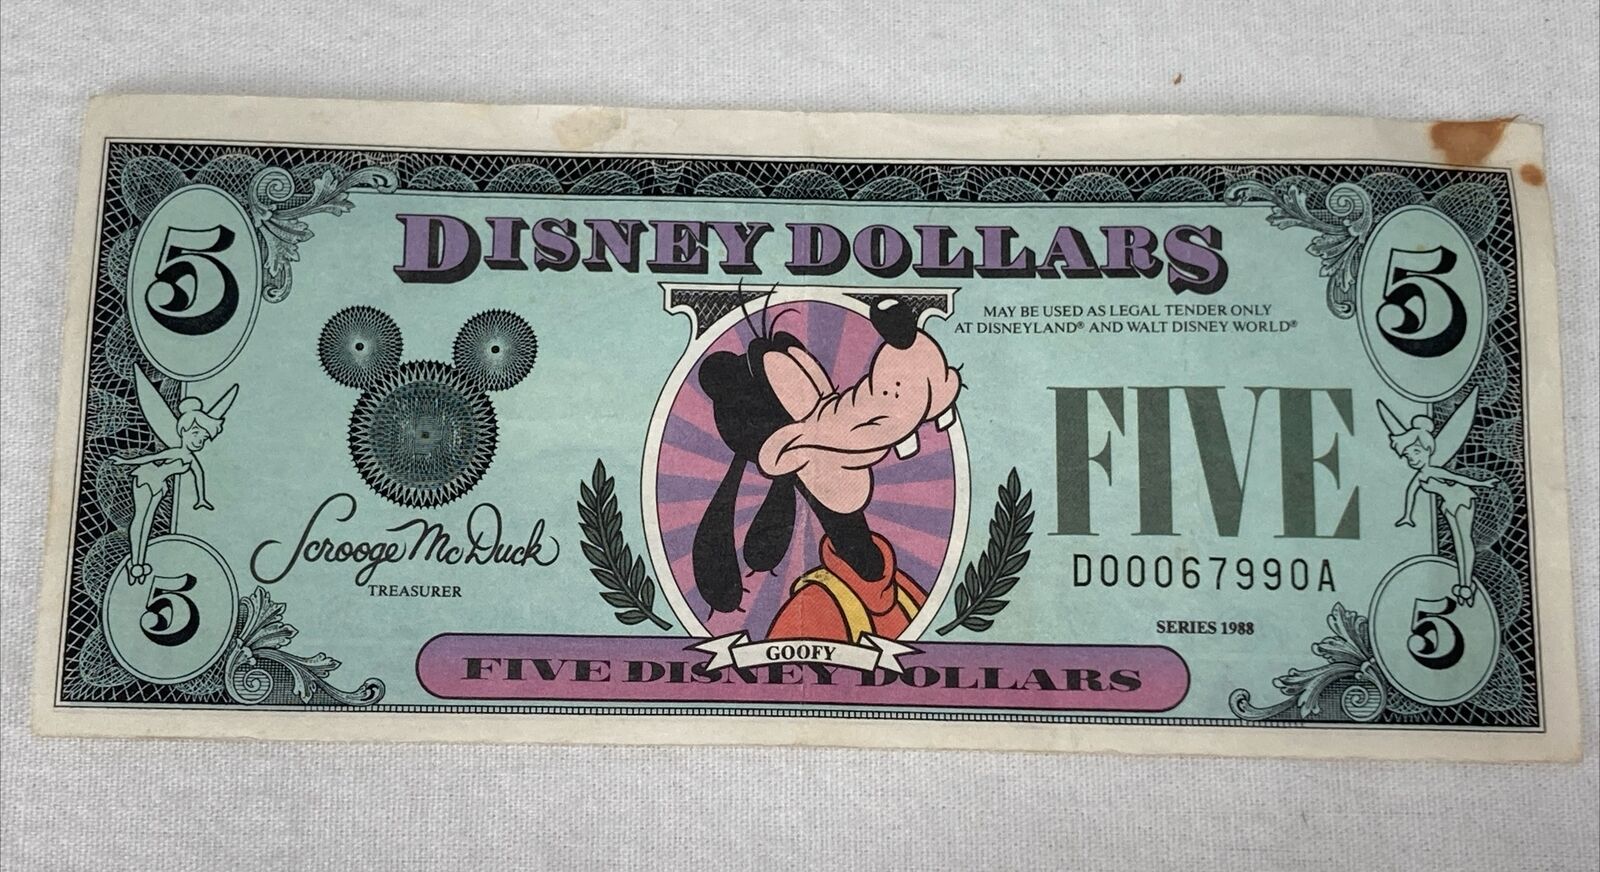 Vintage 1988 Disney Dollar Goofy A Series Bank Note $5